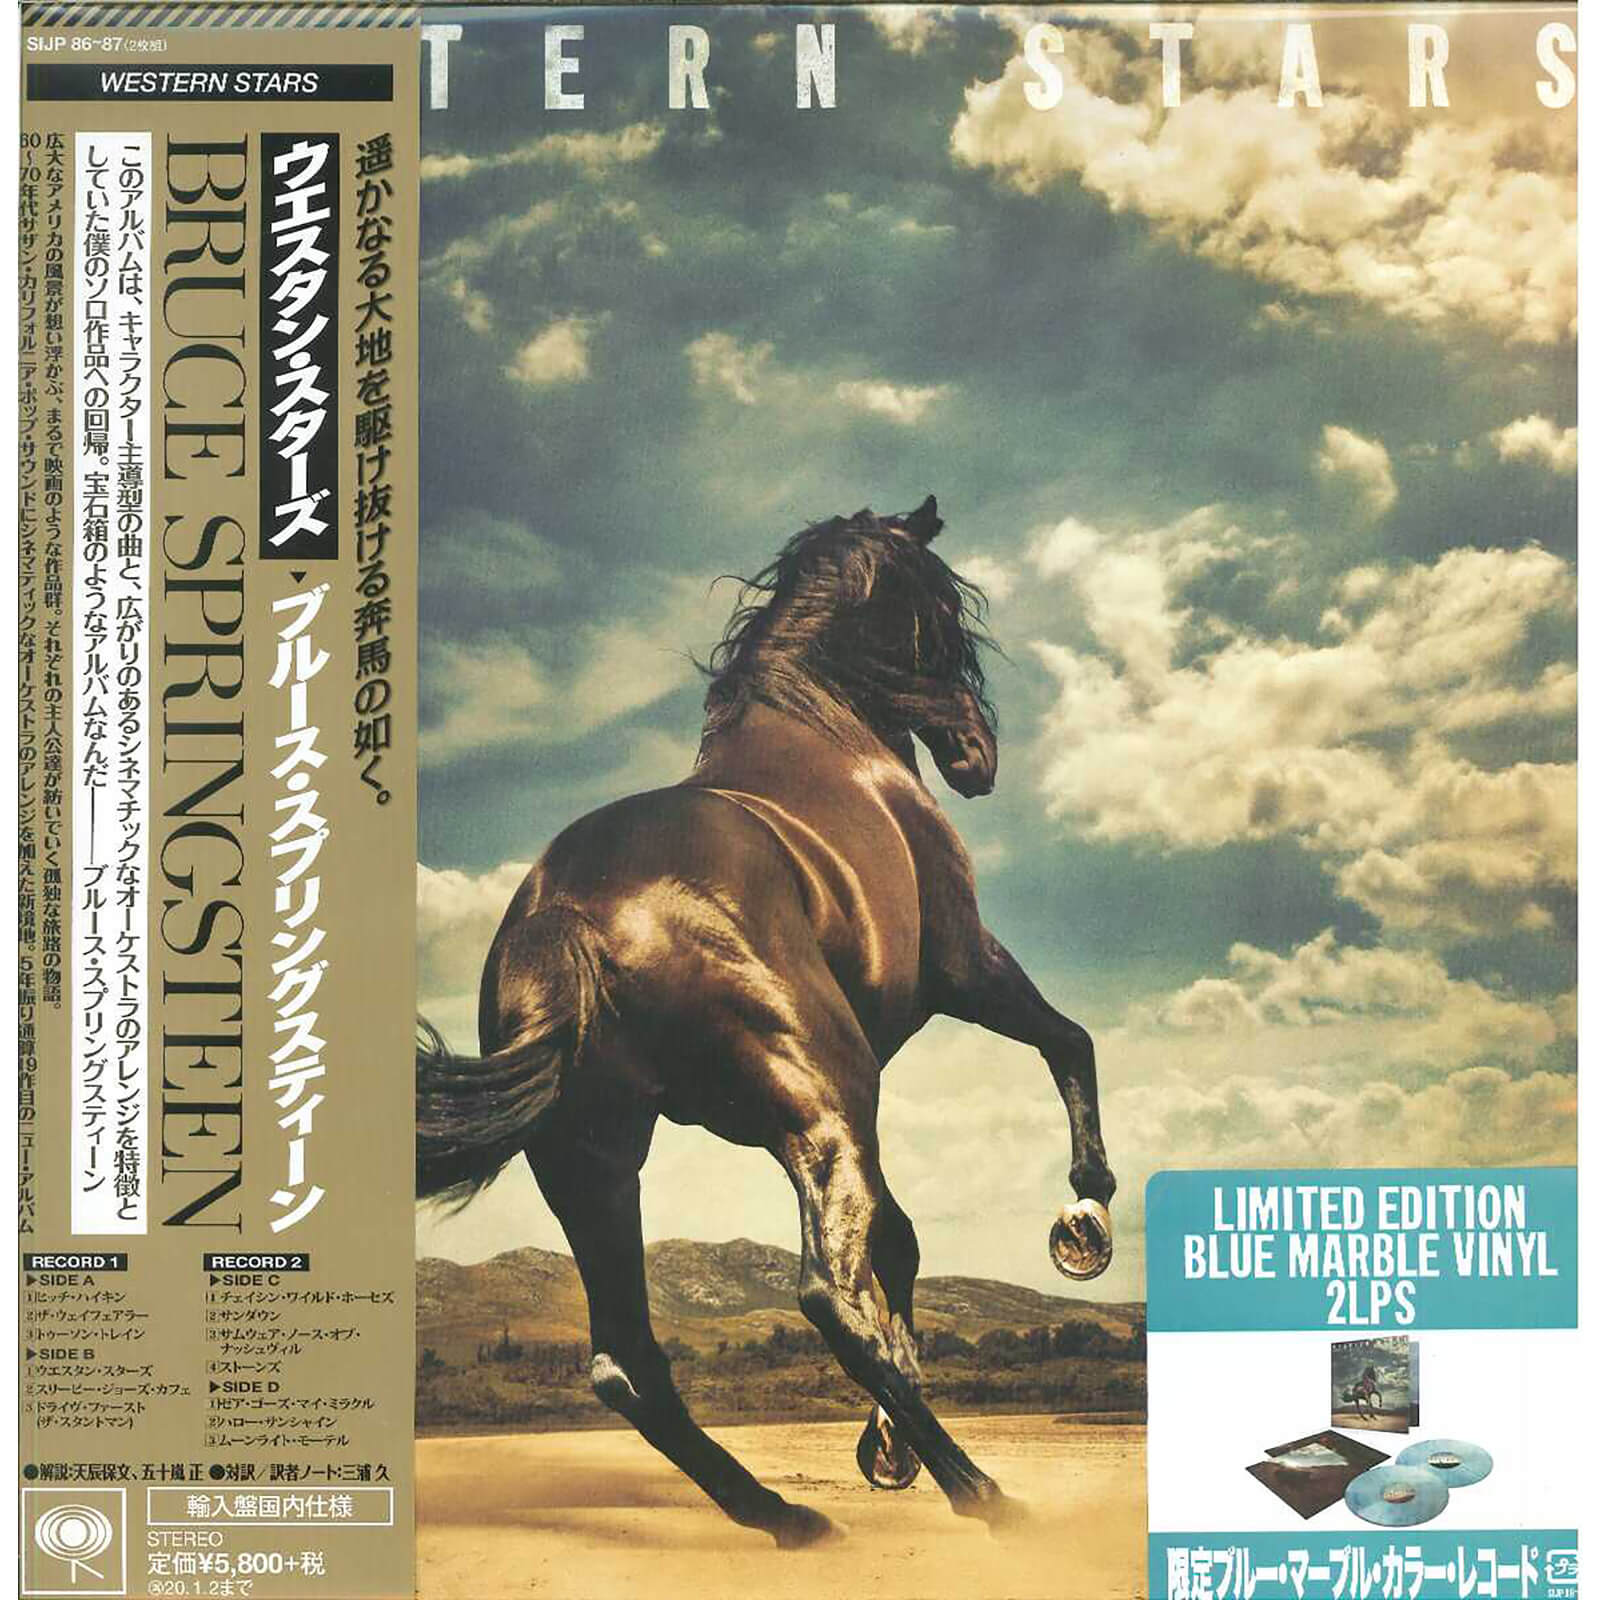 Sony Bruce Springsteen - Western Stars LP Japanese Edition